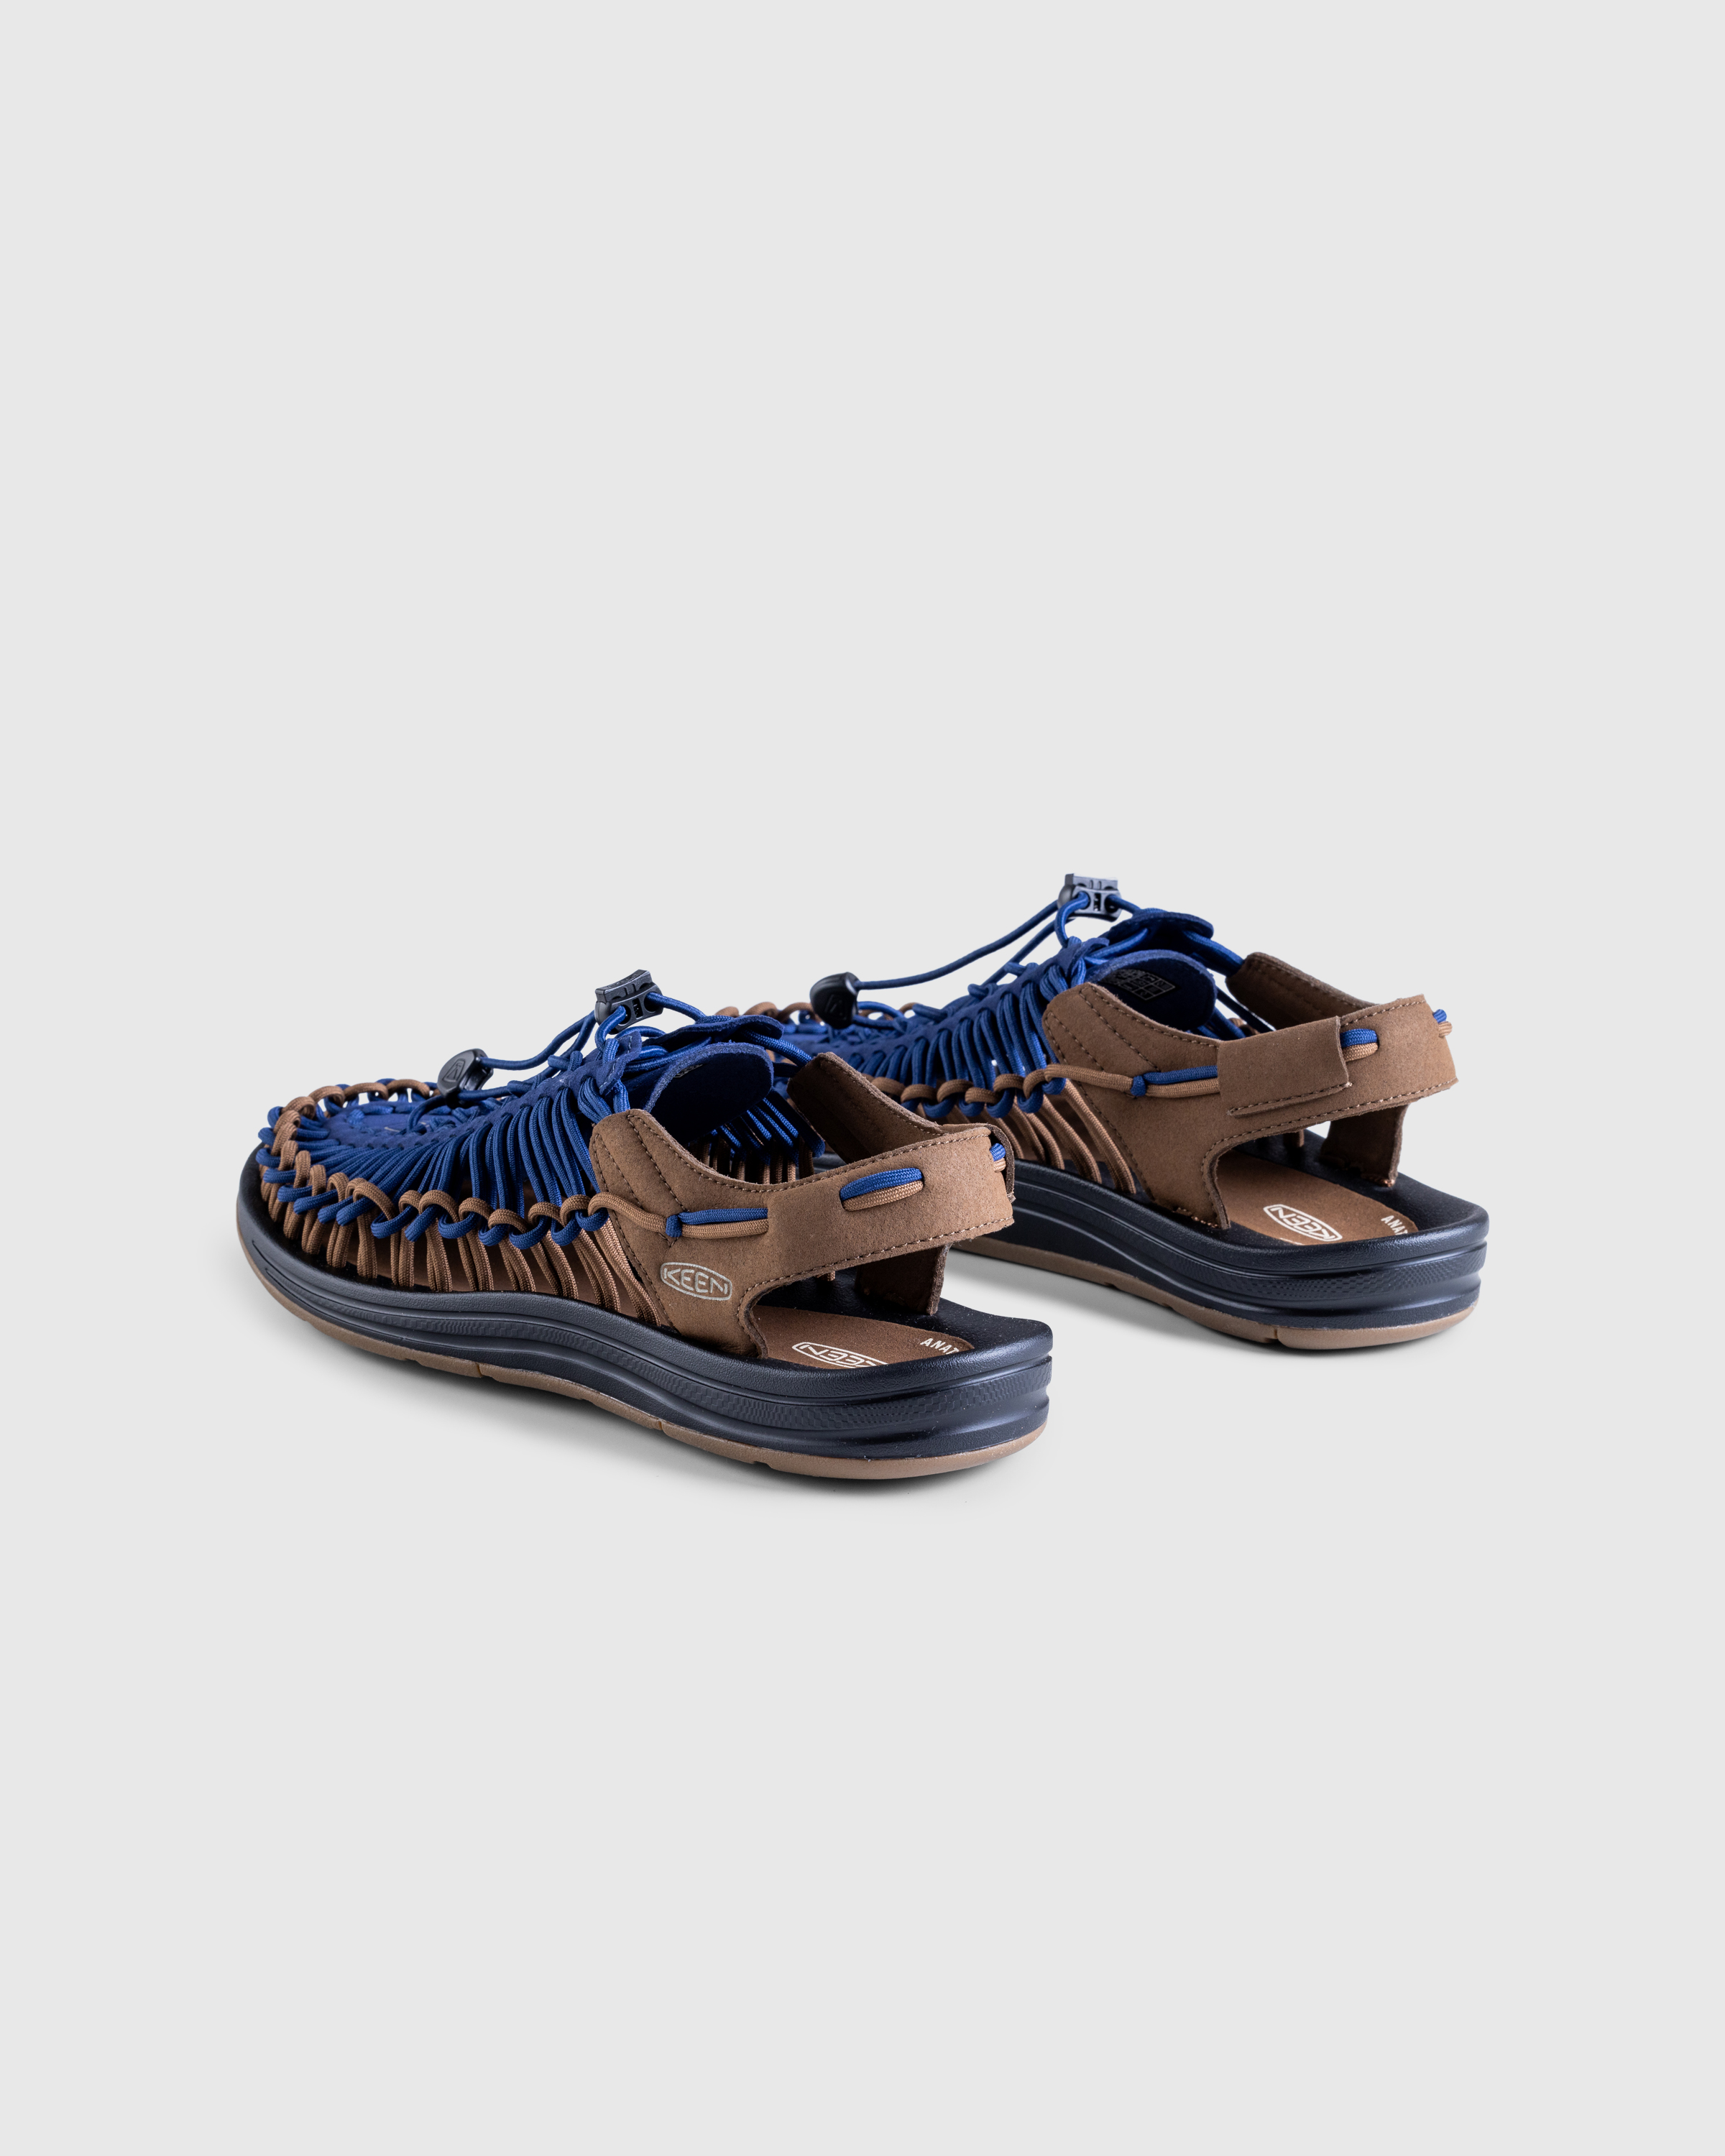 Keen – Uneek M Naval Academy/Bison - Sandals - Blue - Image 4